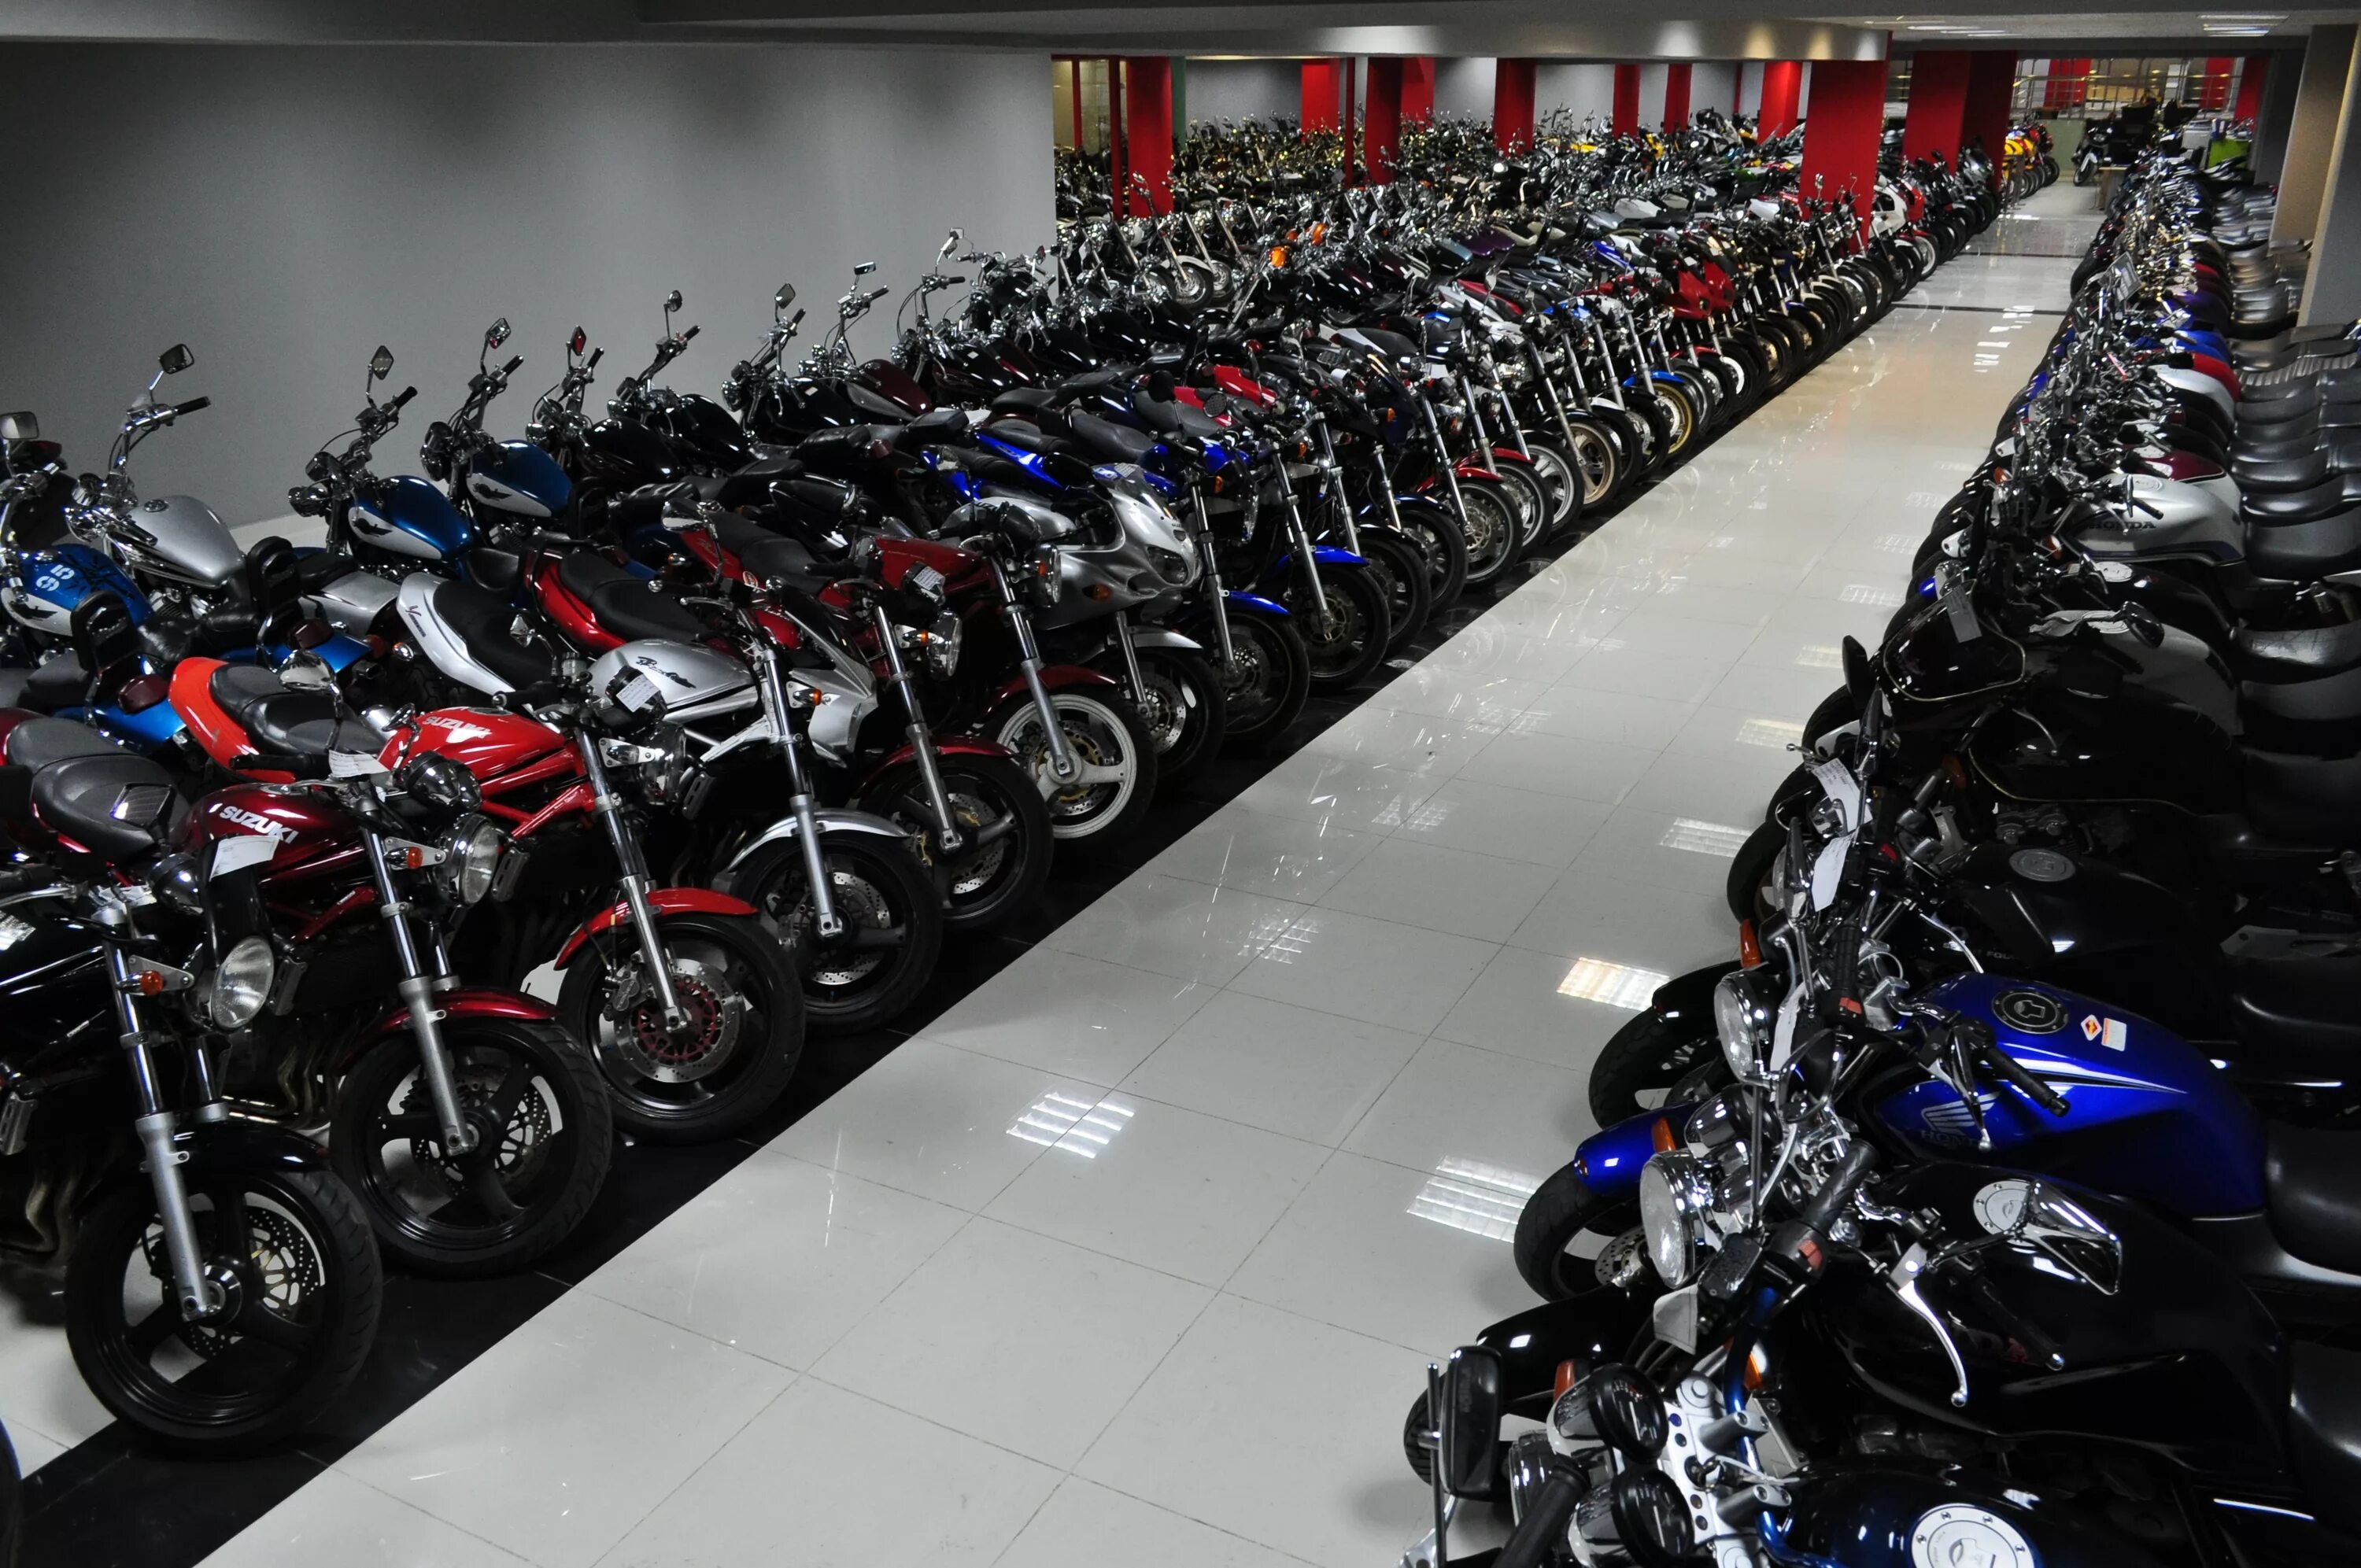 Мотосалон Мегамото Москва. Салон мотоциклов. Много мотоциклов. Рынок мотоциклов. Покупка новых мотоциклов